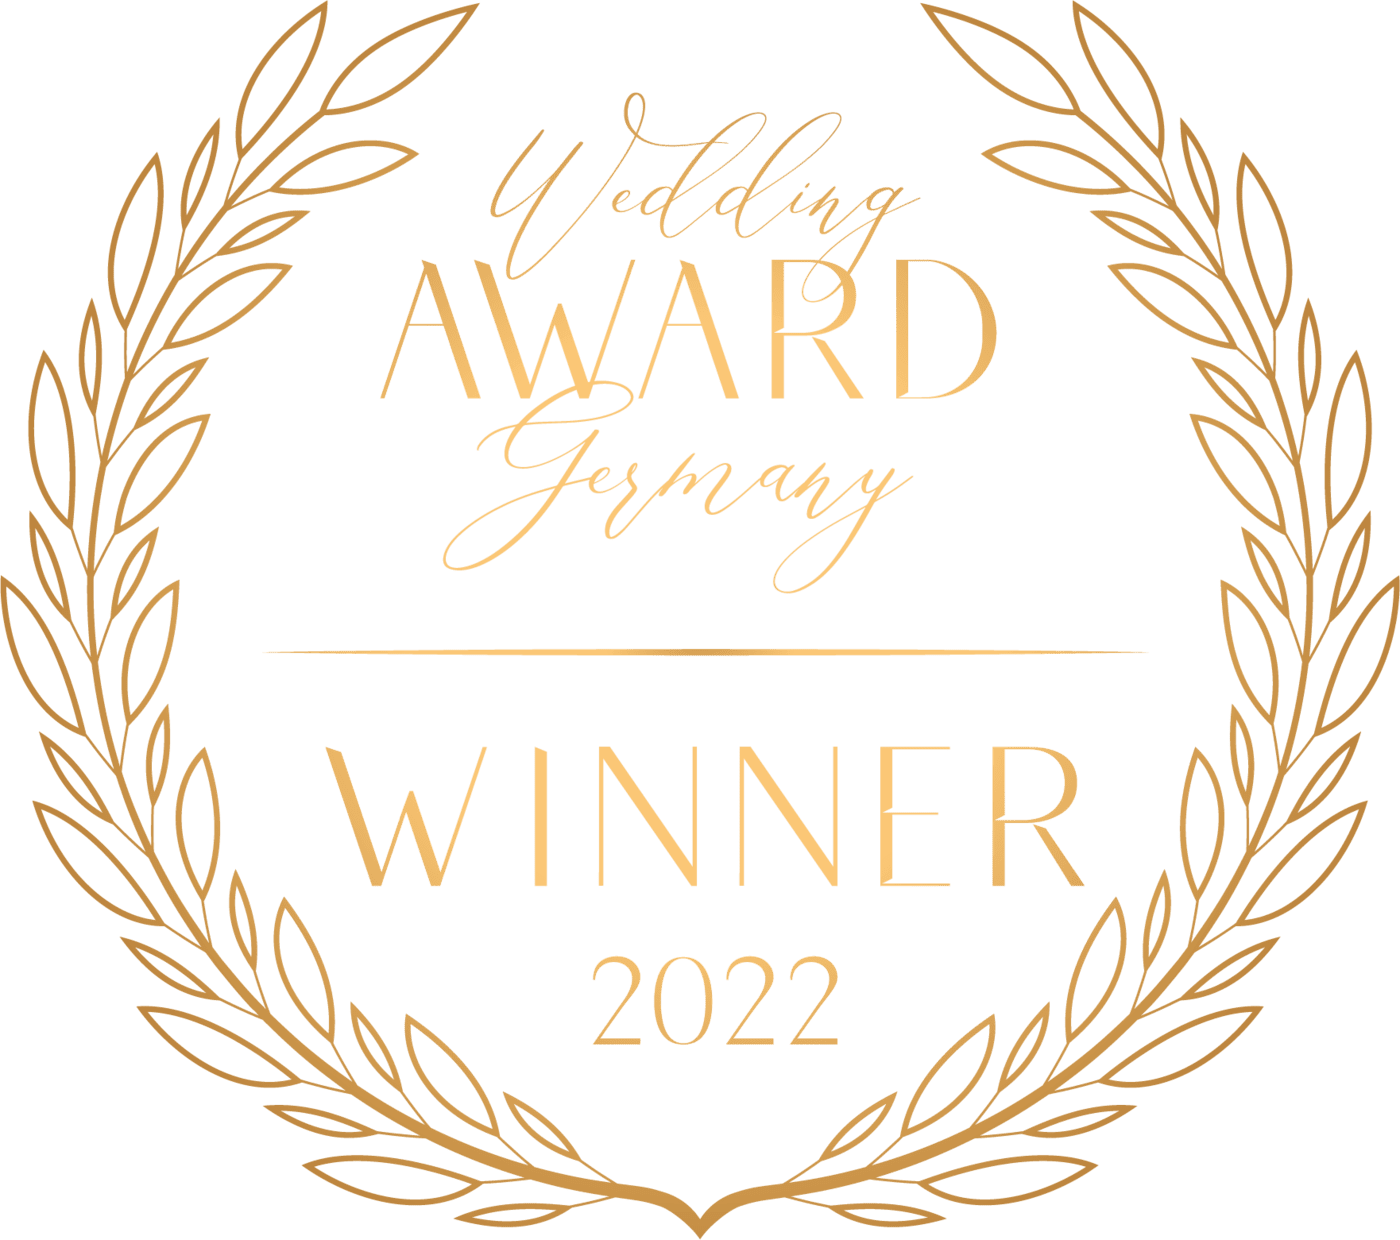 Wedding-Award-Gewinner-2022